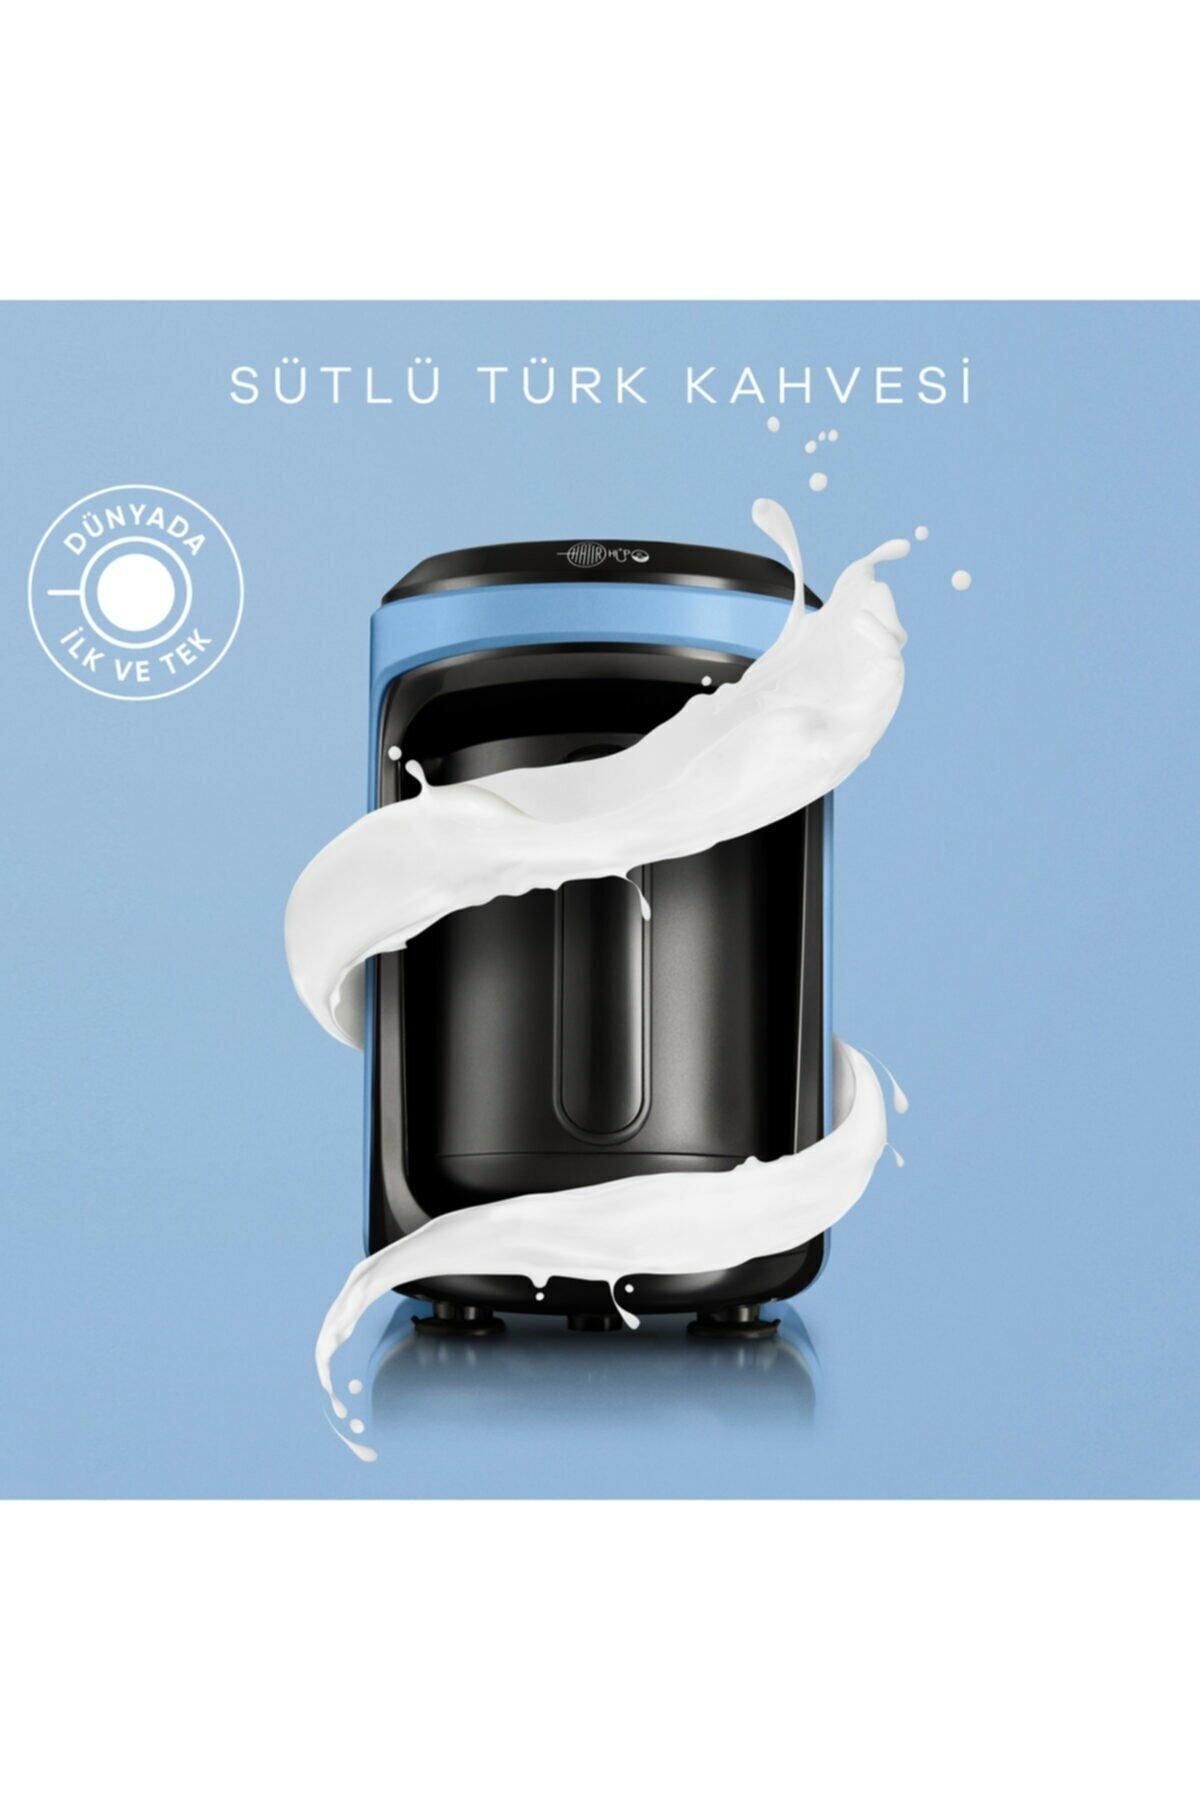 Karaca Hatir Hüps Türk Kahvesi Makinası Vintage Blue